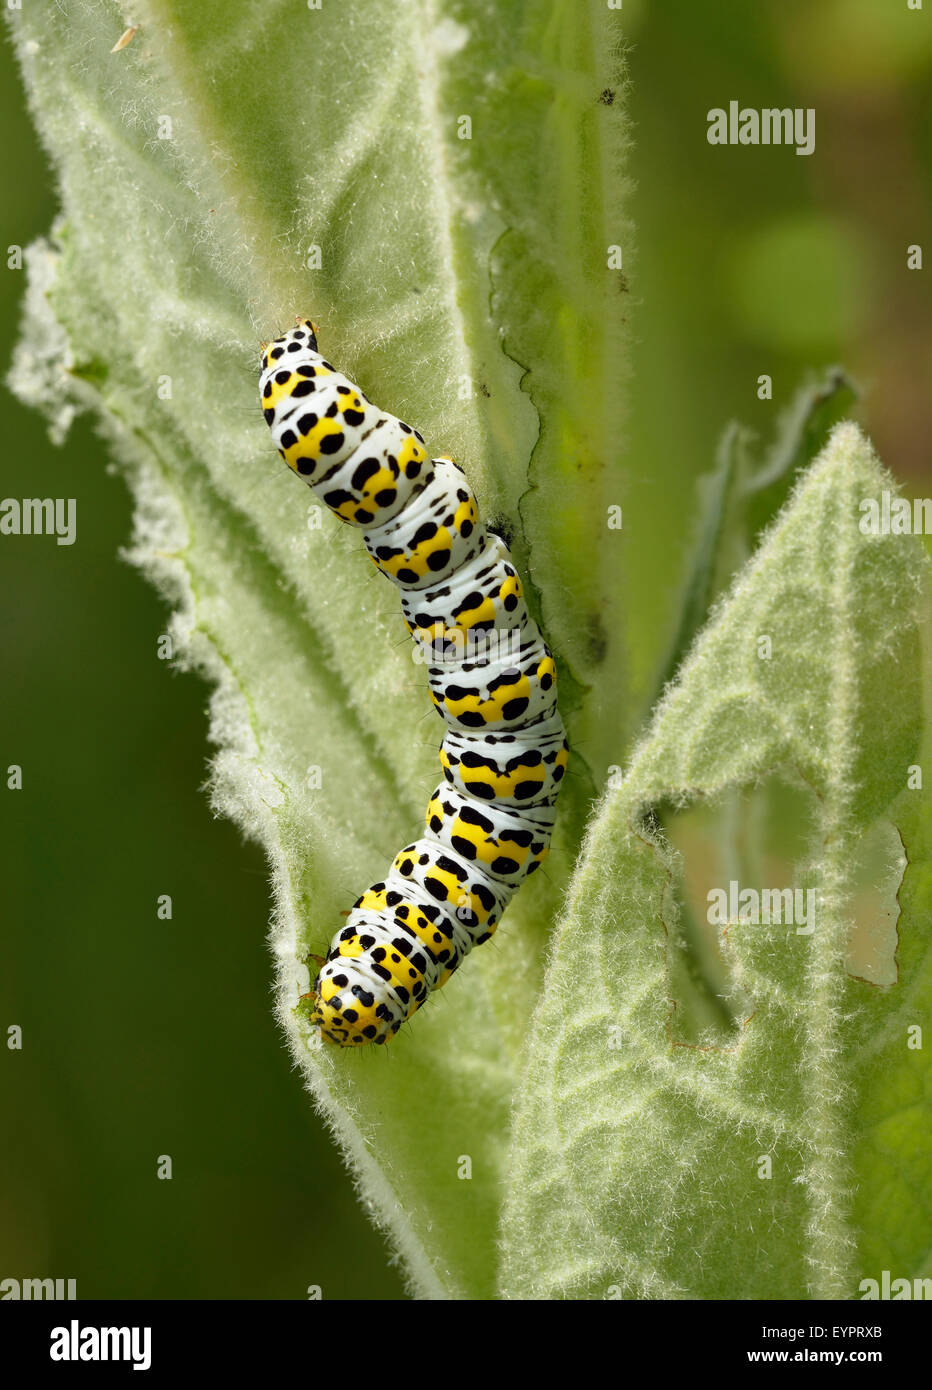 Mullein Moth Caterpillar - Cucullia verbasci Larvae on Mullein Leaf Stock Photo